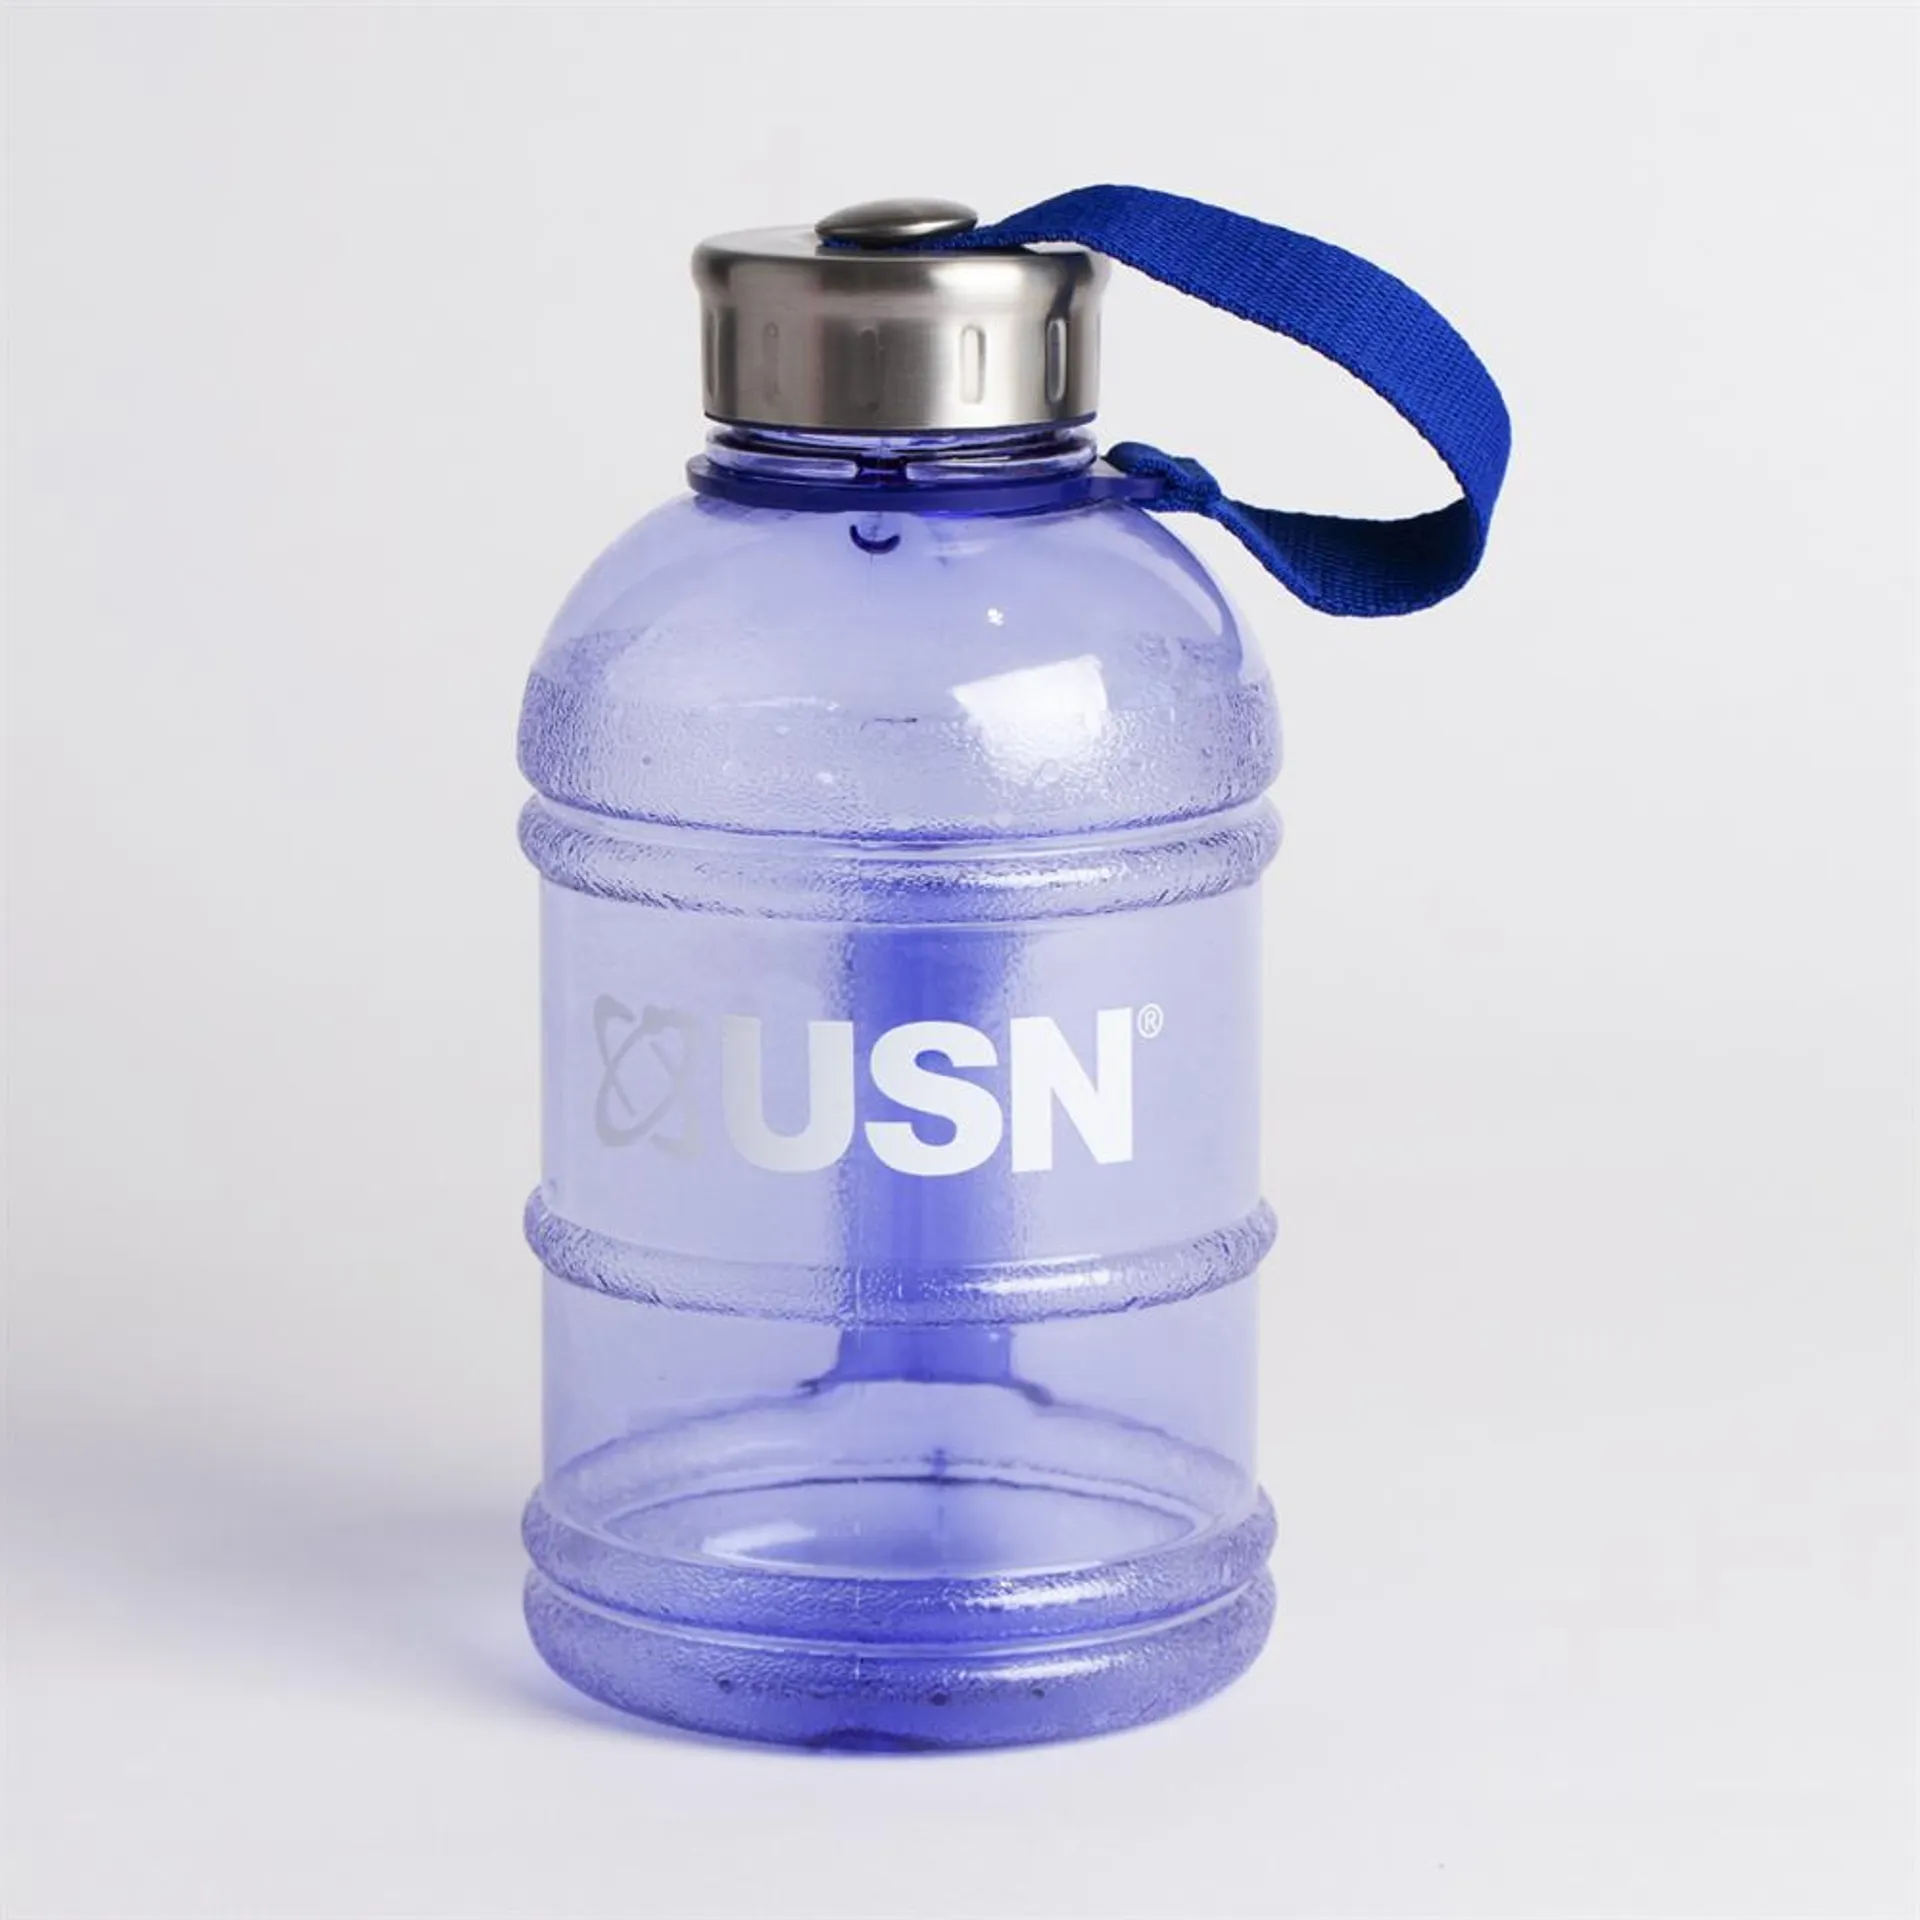 USN Small Water Bottle Jug 1 Litre - Blue